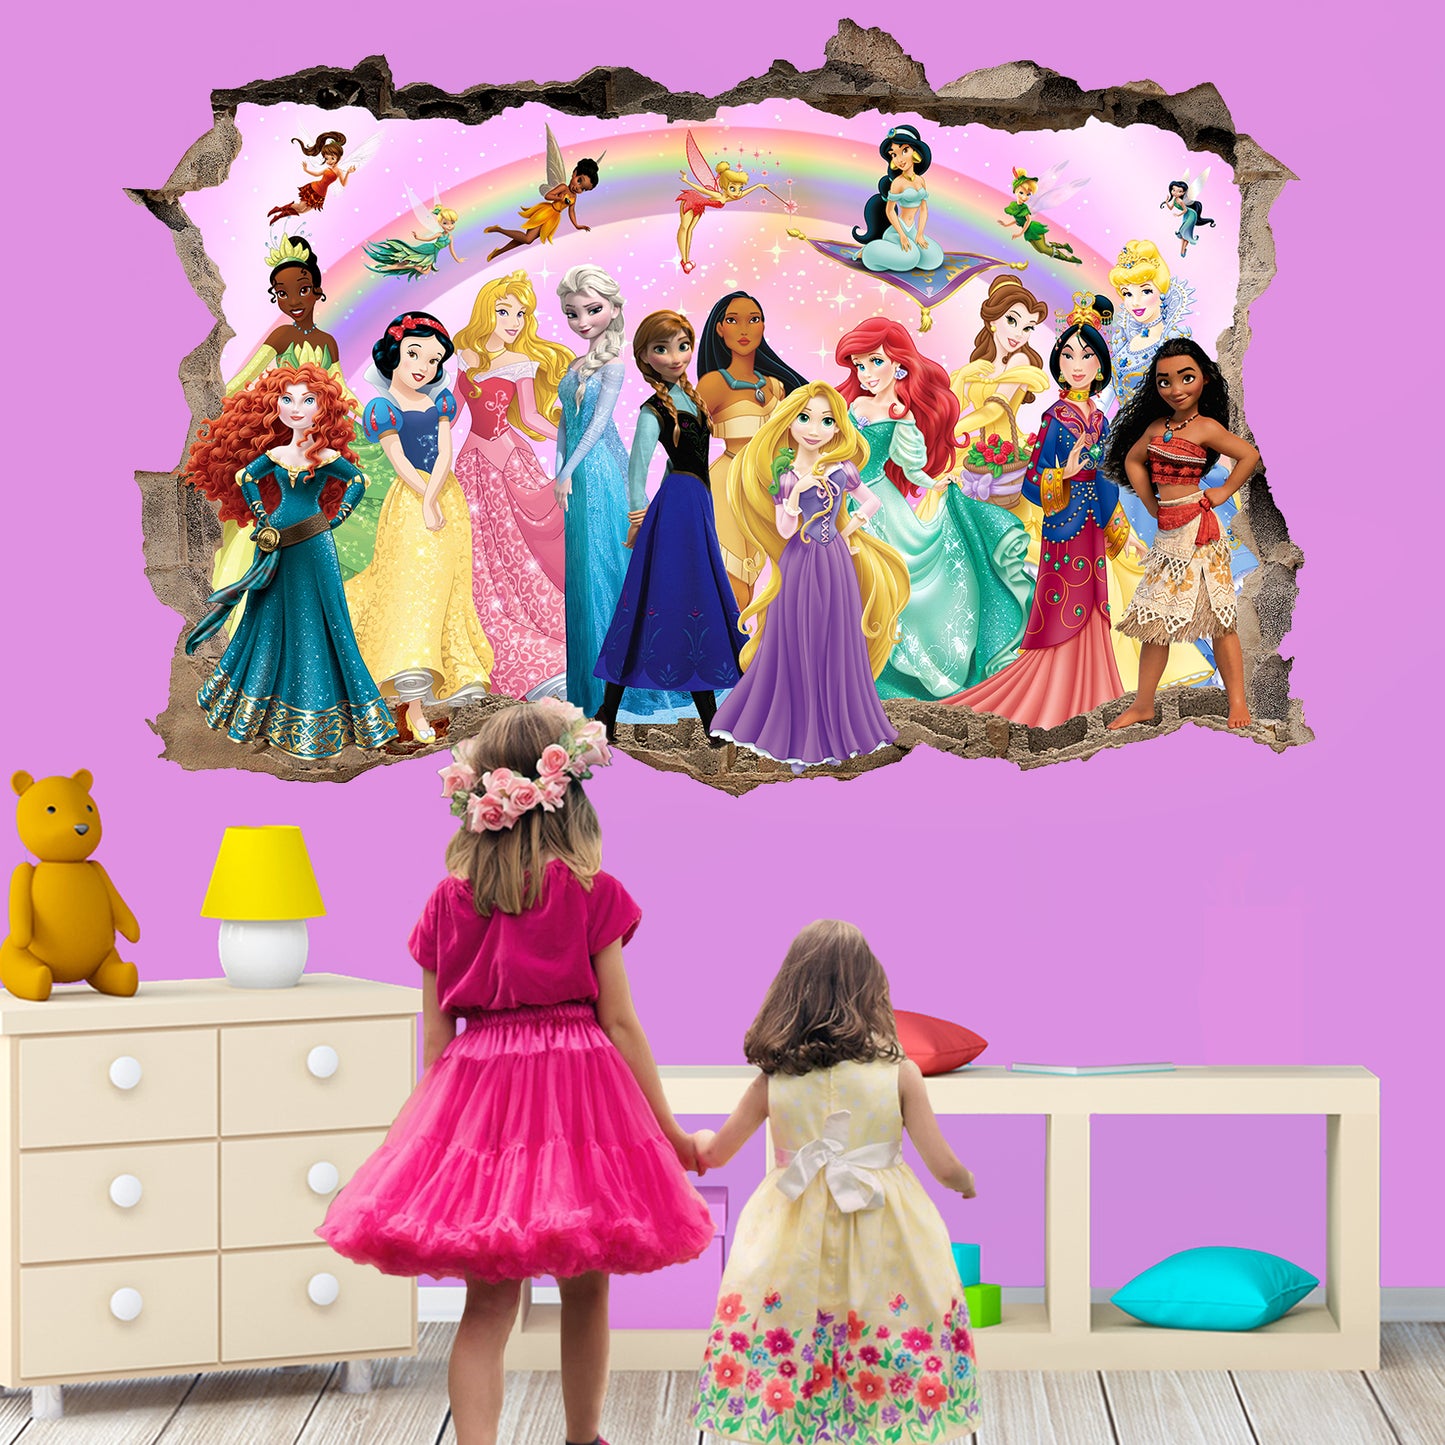 Rainbow Princess Characters and Fairies Wall Sticker Art Poster Decal Mural  Nursery Girls Bedroom Decor 1095